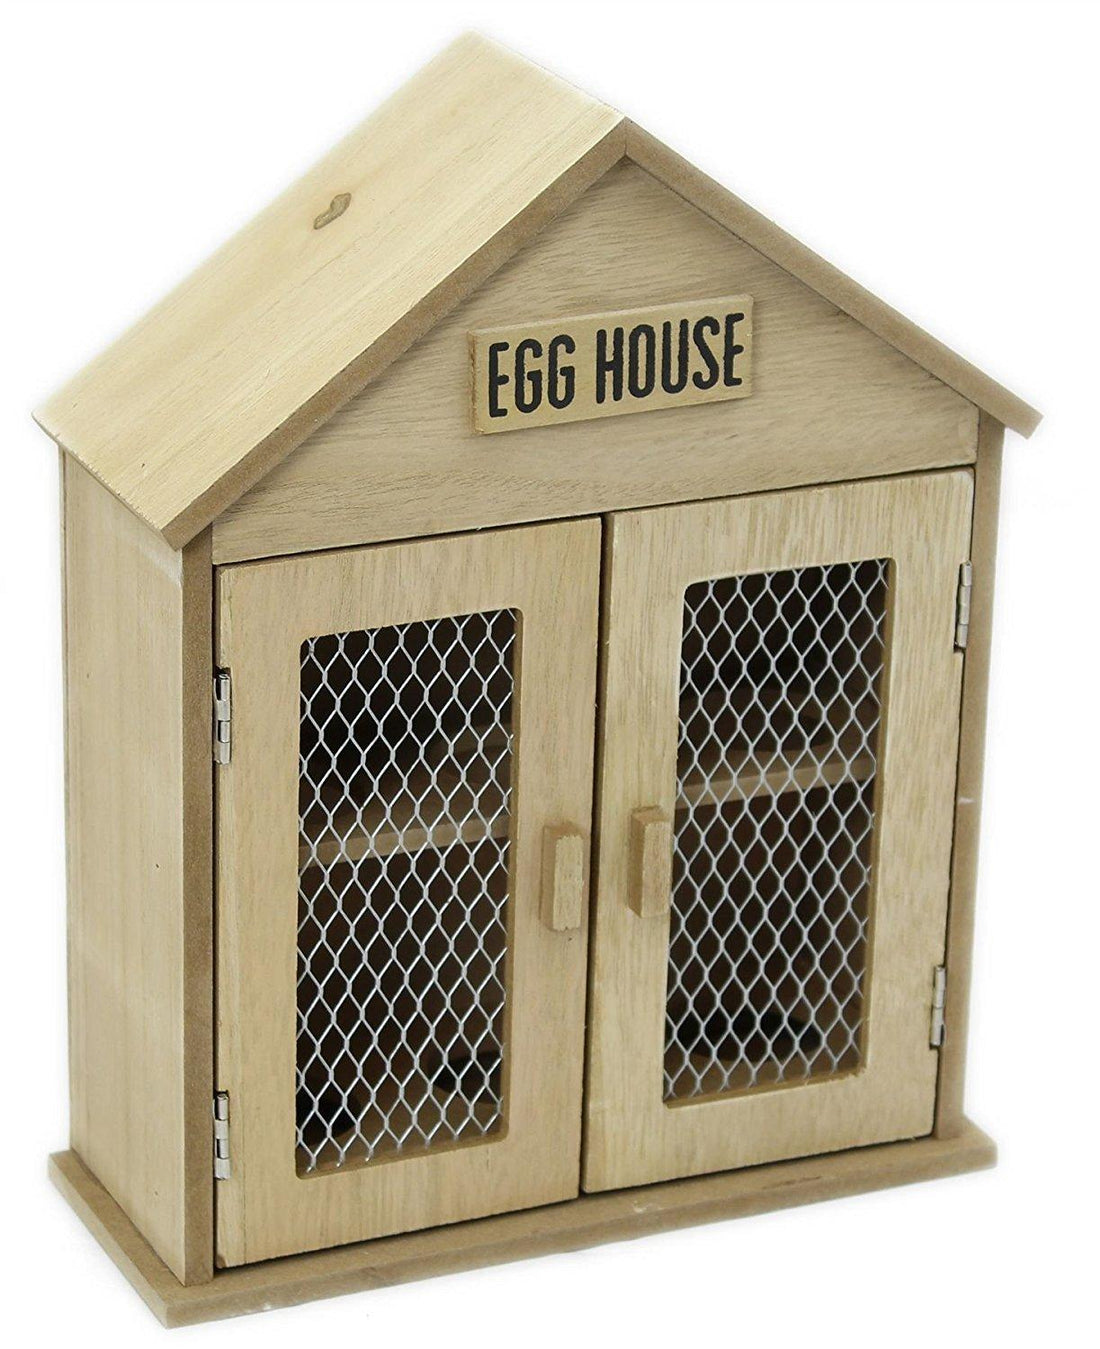 Wooden Two Door Egg House - £28.99 - Kitchen Storage 